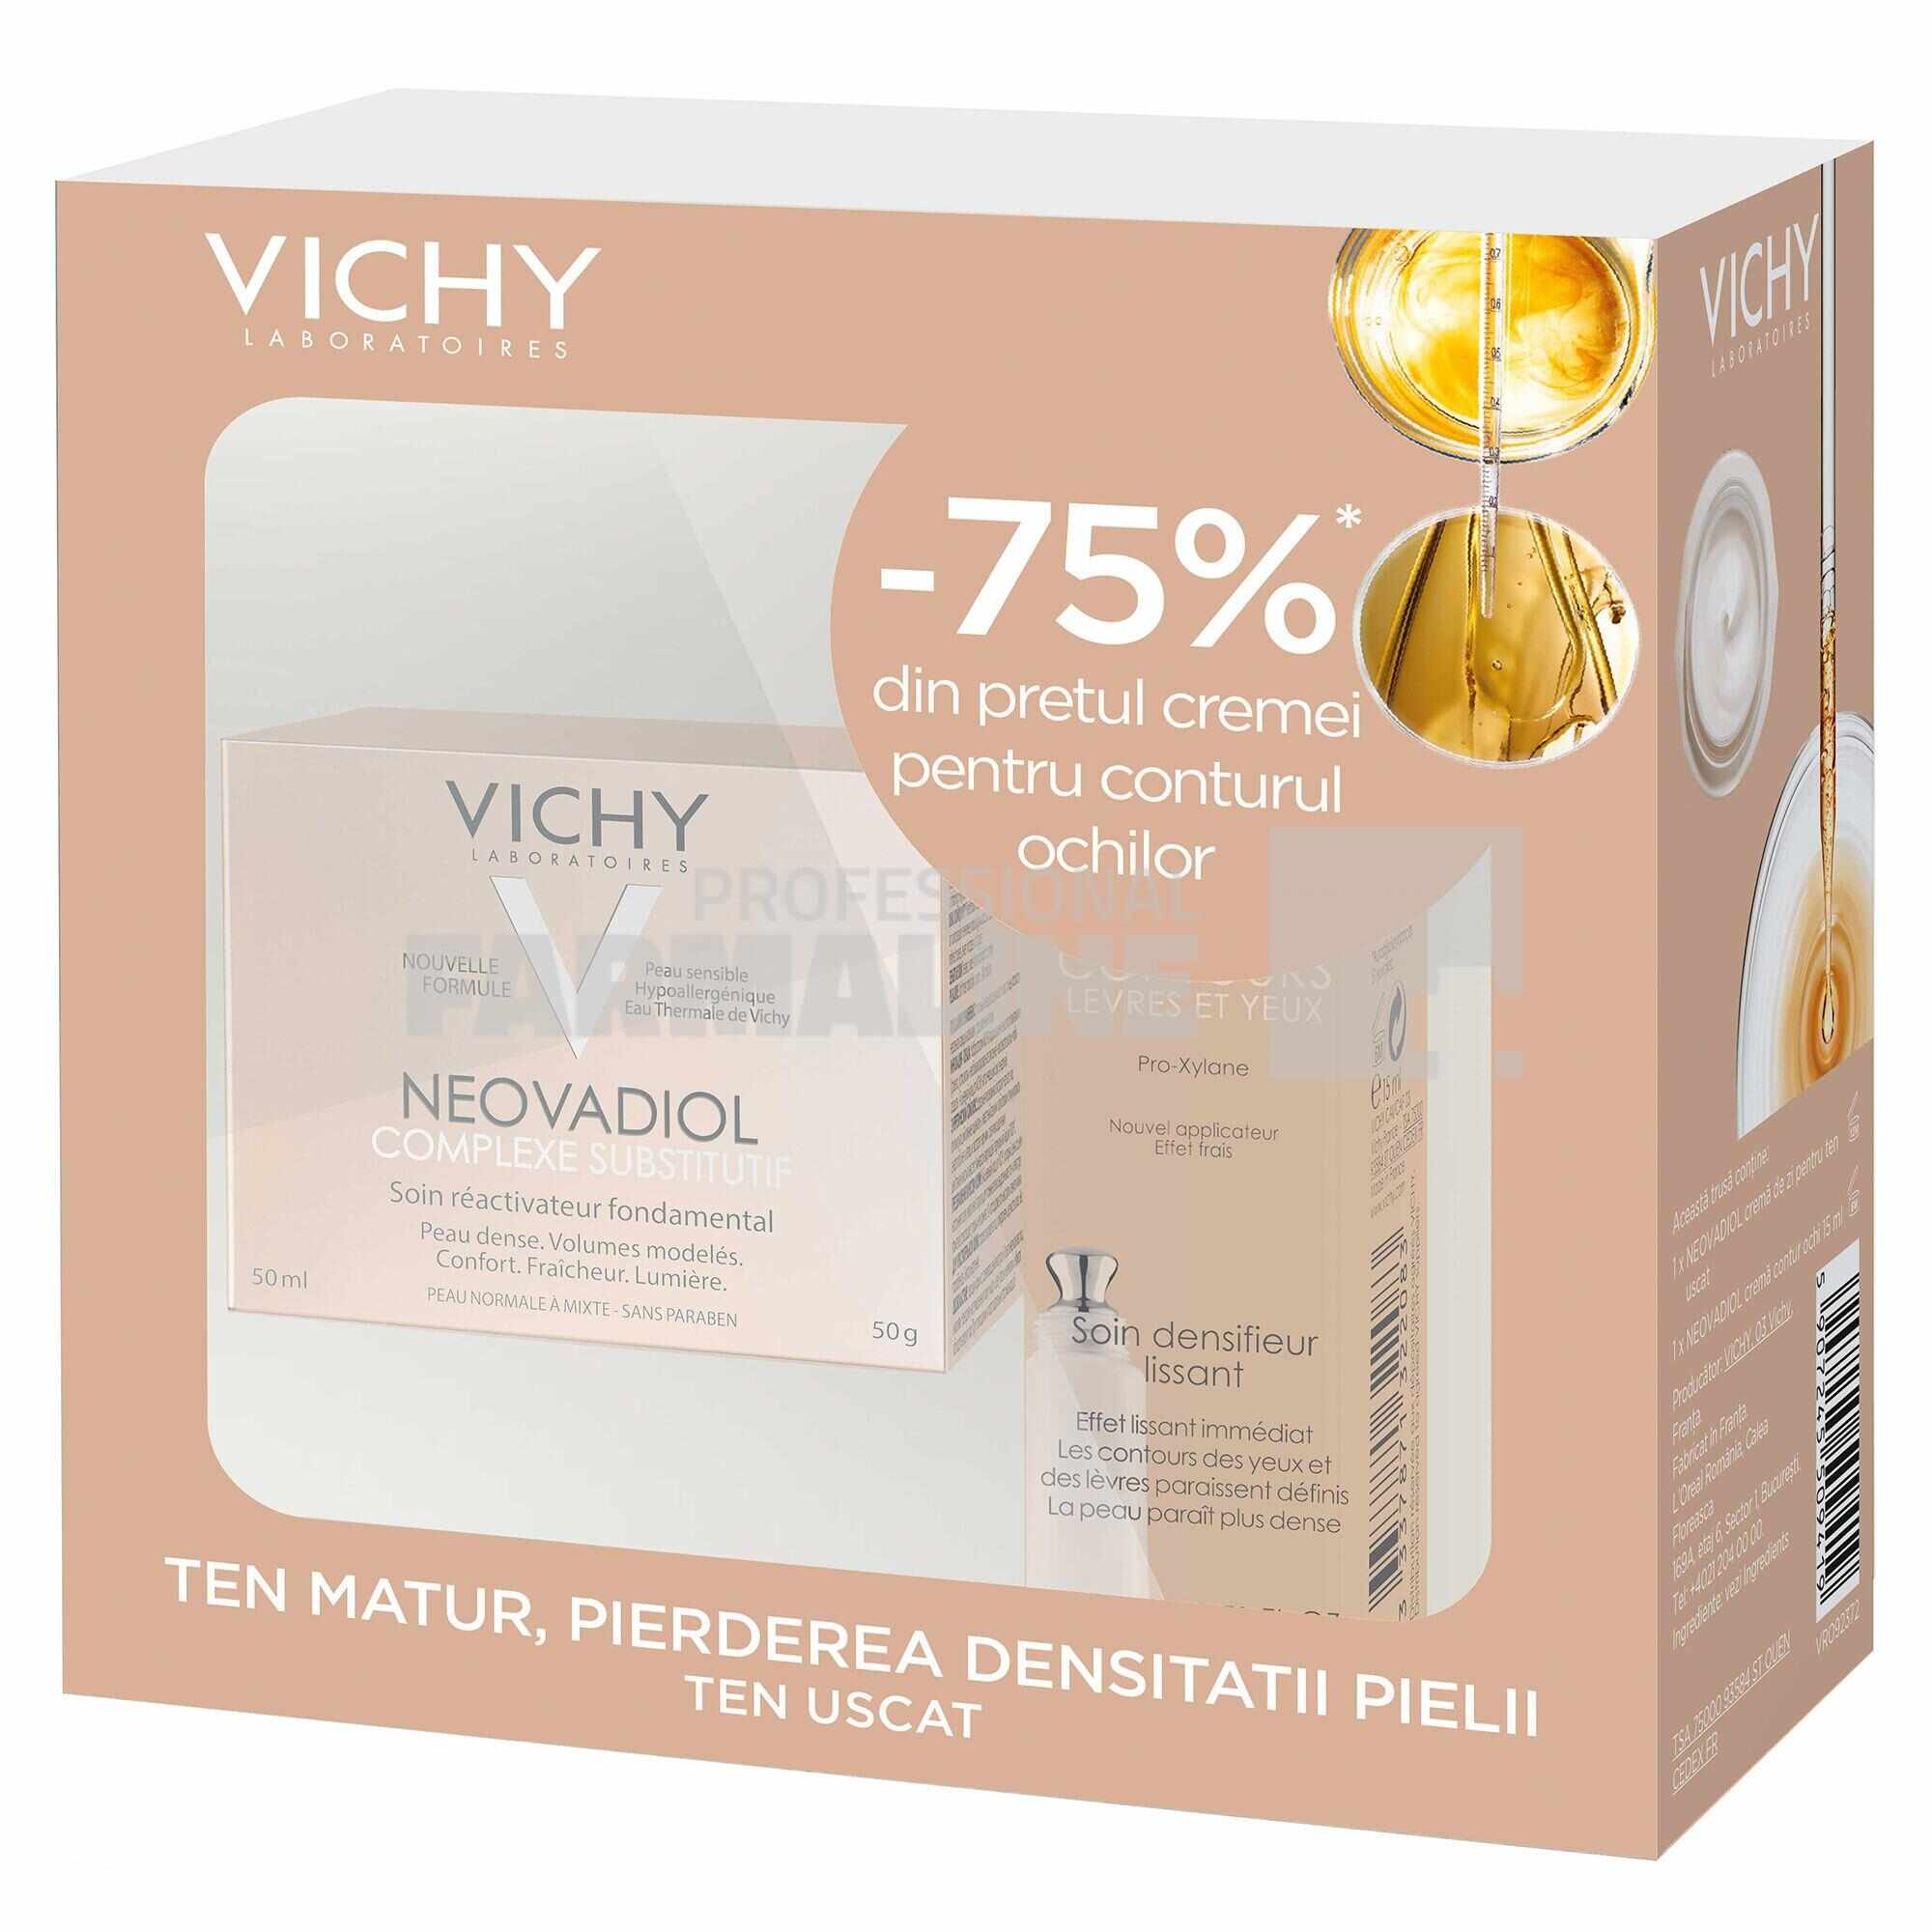 Vichy Neovadiol Pachet Ccomplex Substitutiv Crema zi ten uscat 50 ml + Crema contur ochi 15 ml 1+1 - 70% din al II lea